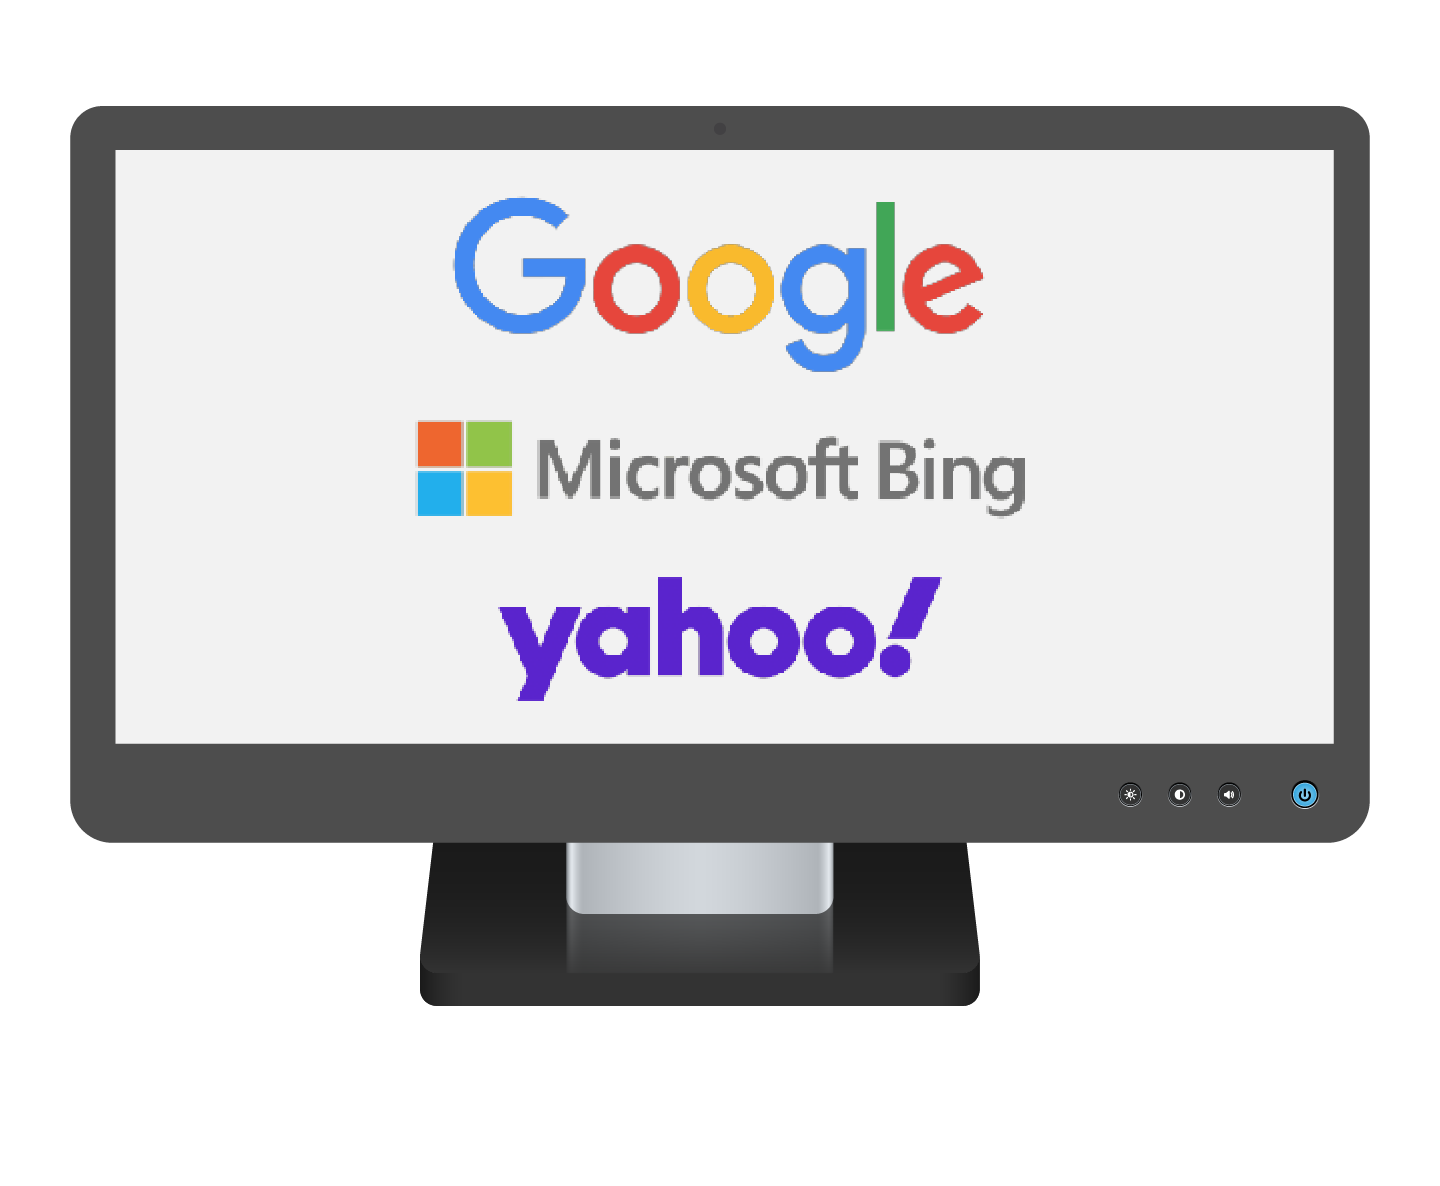 顯示Google、Microsoft Bing和Yahoo!商標的桌上電腦